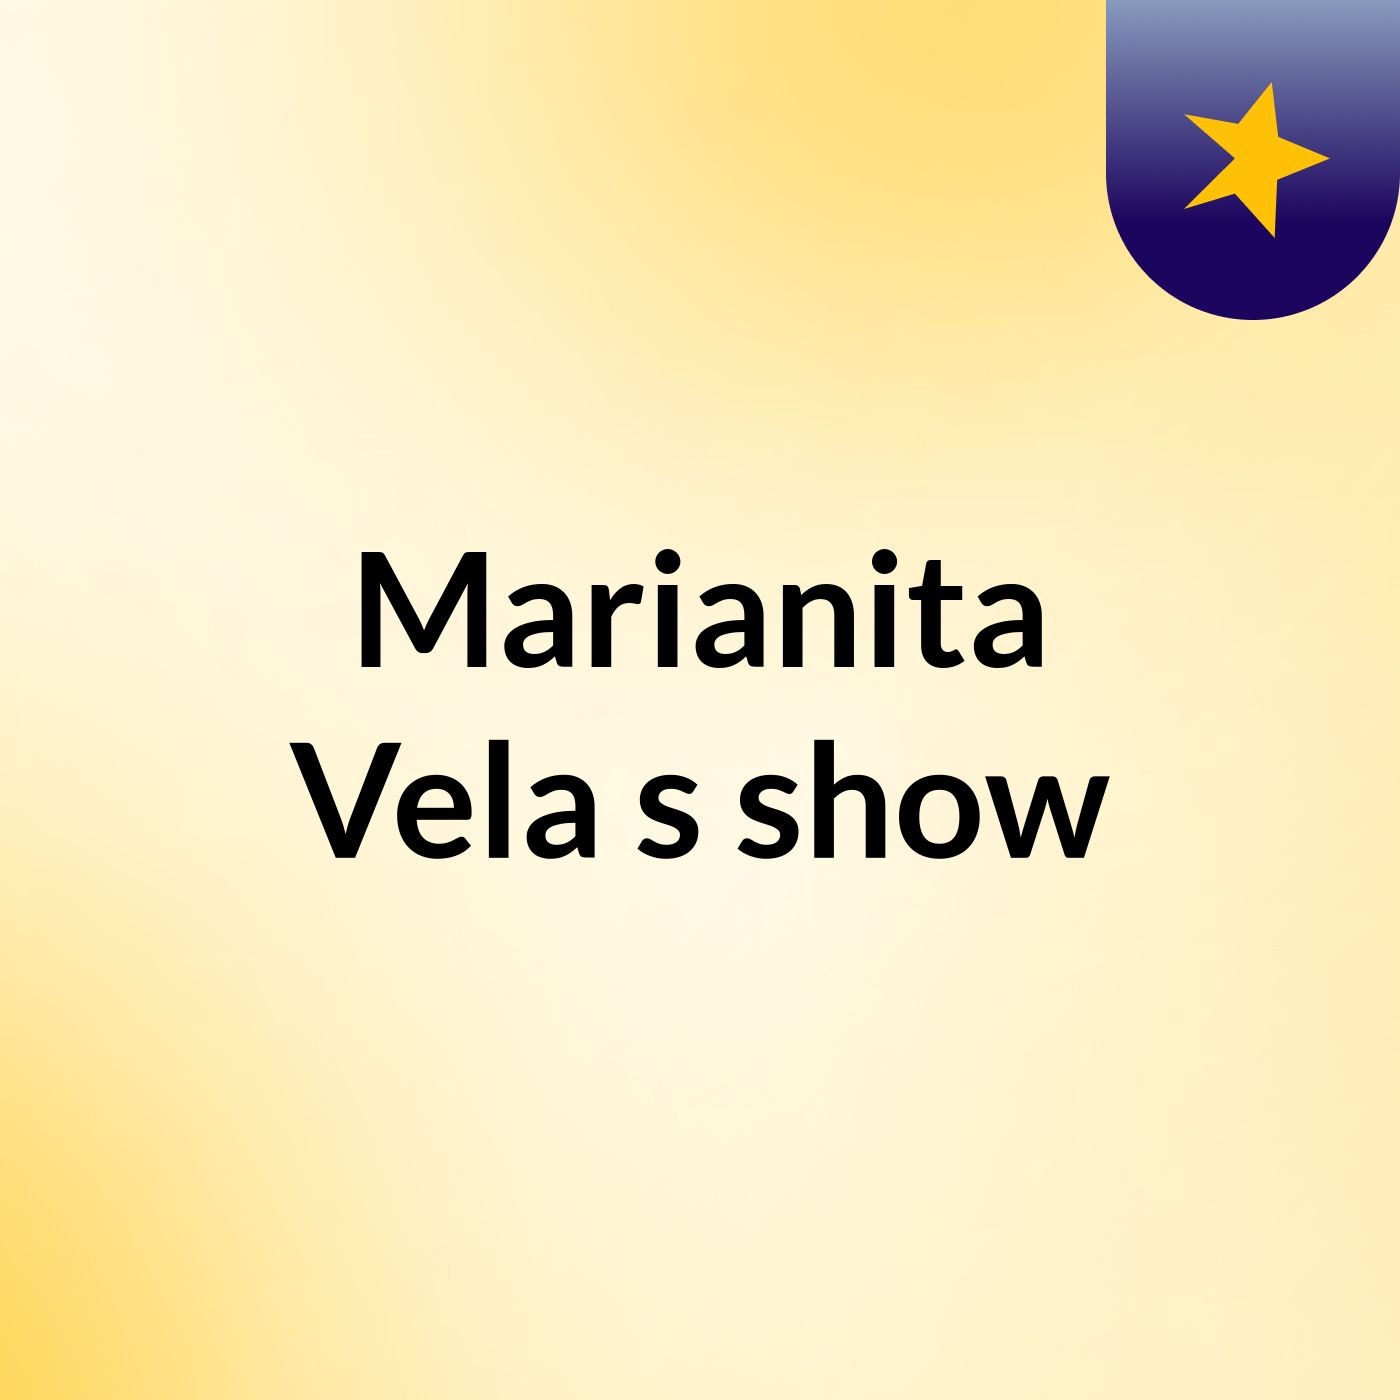 Marianita Vela's show